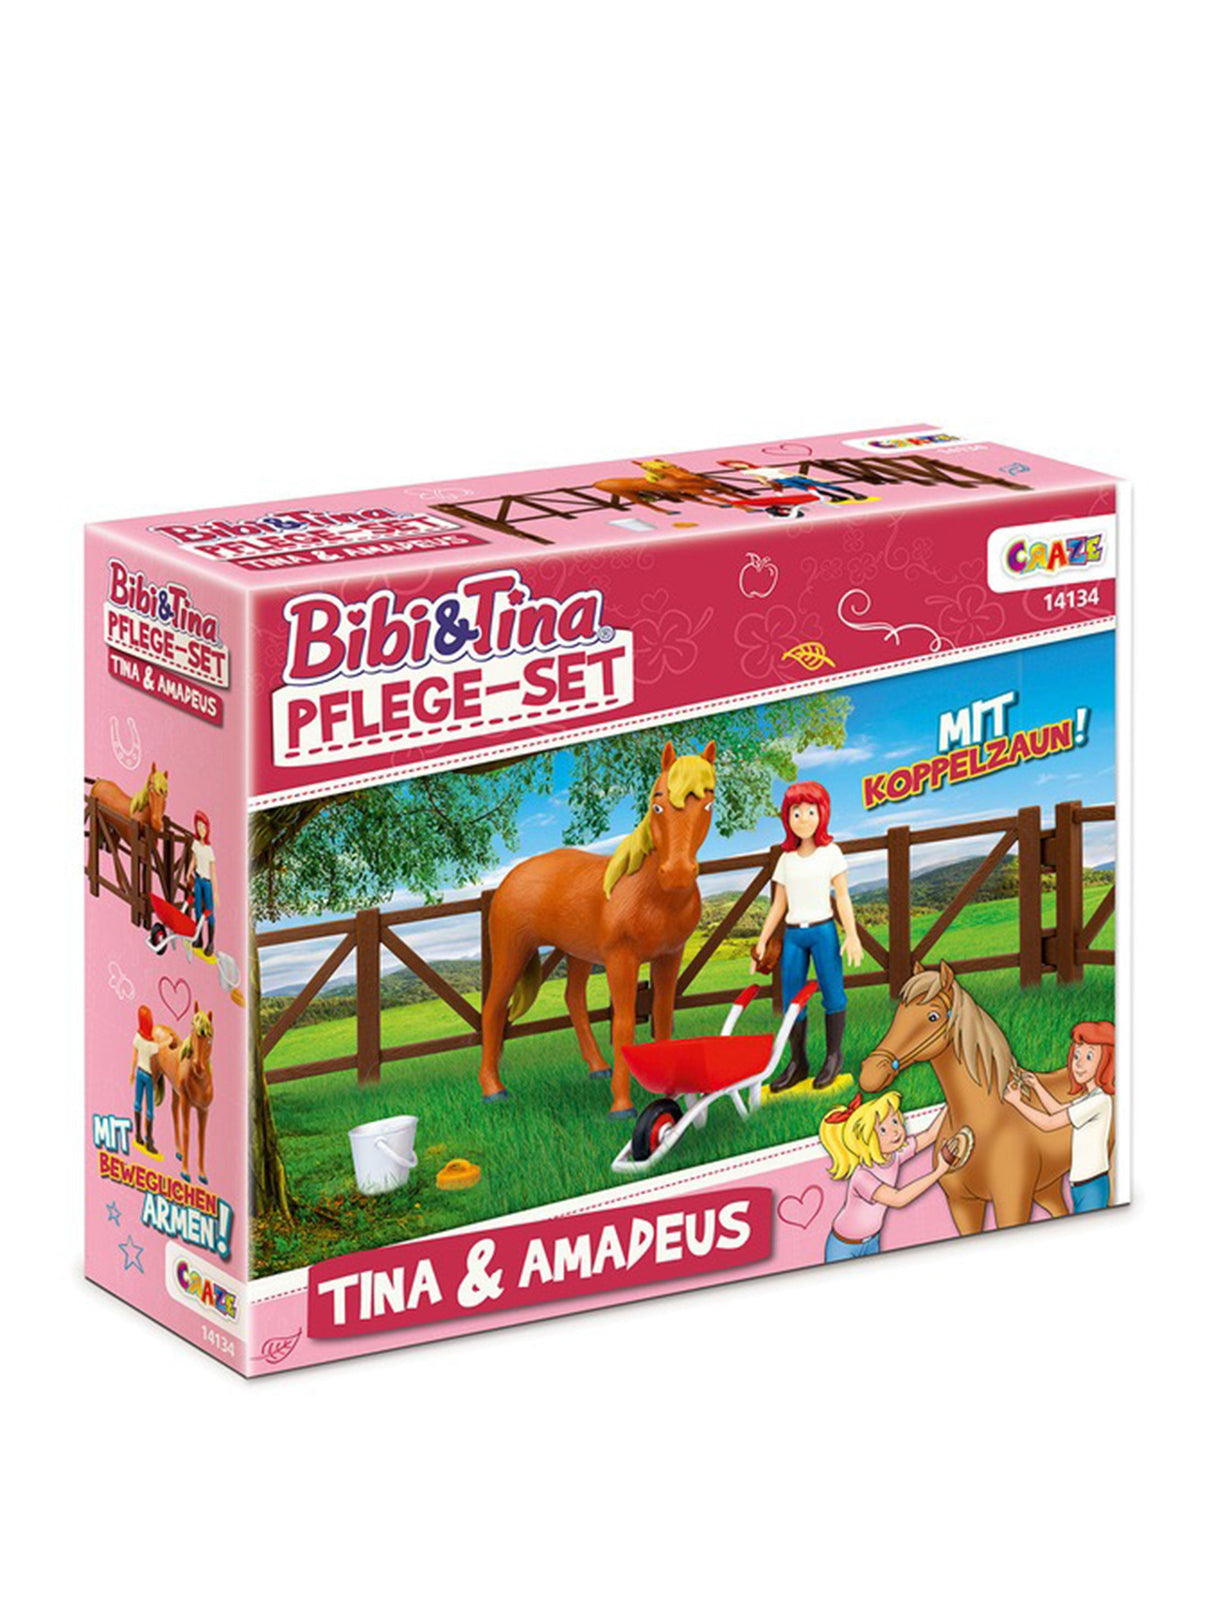 All Bibi – Tina Outlet Figures & Factory Brands